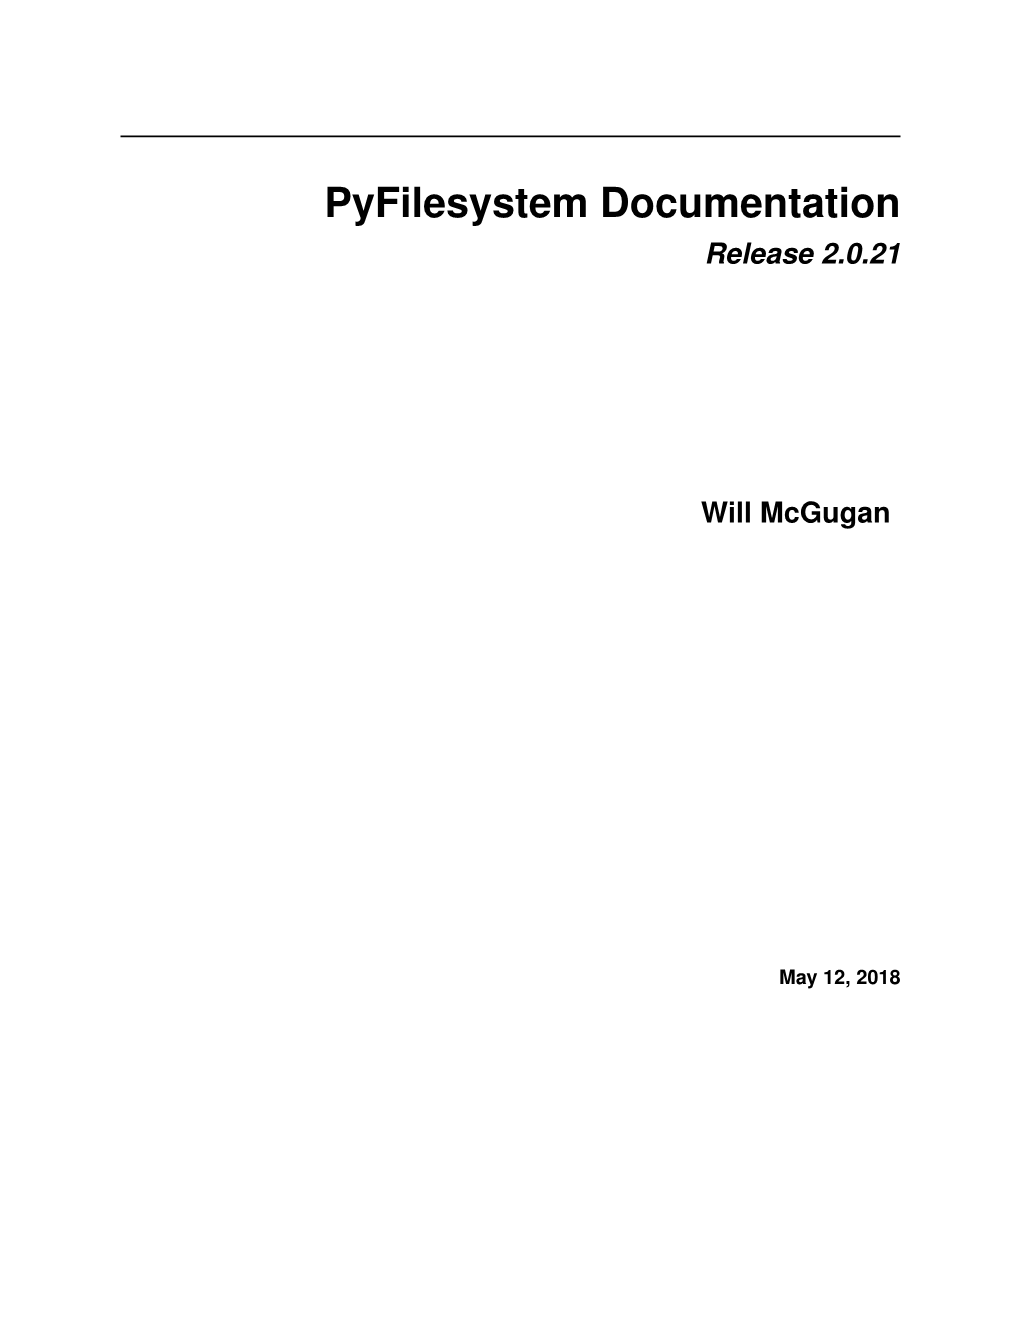 Pyfilesystem Documentation Release 2.0.21